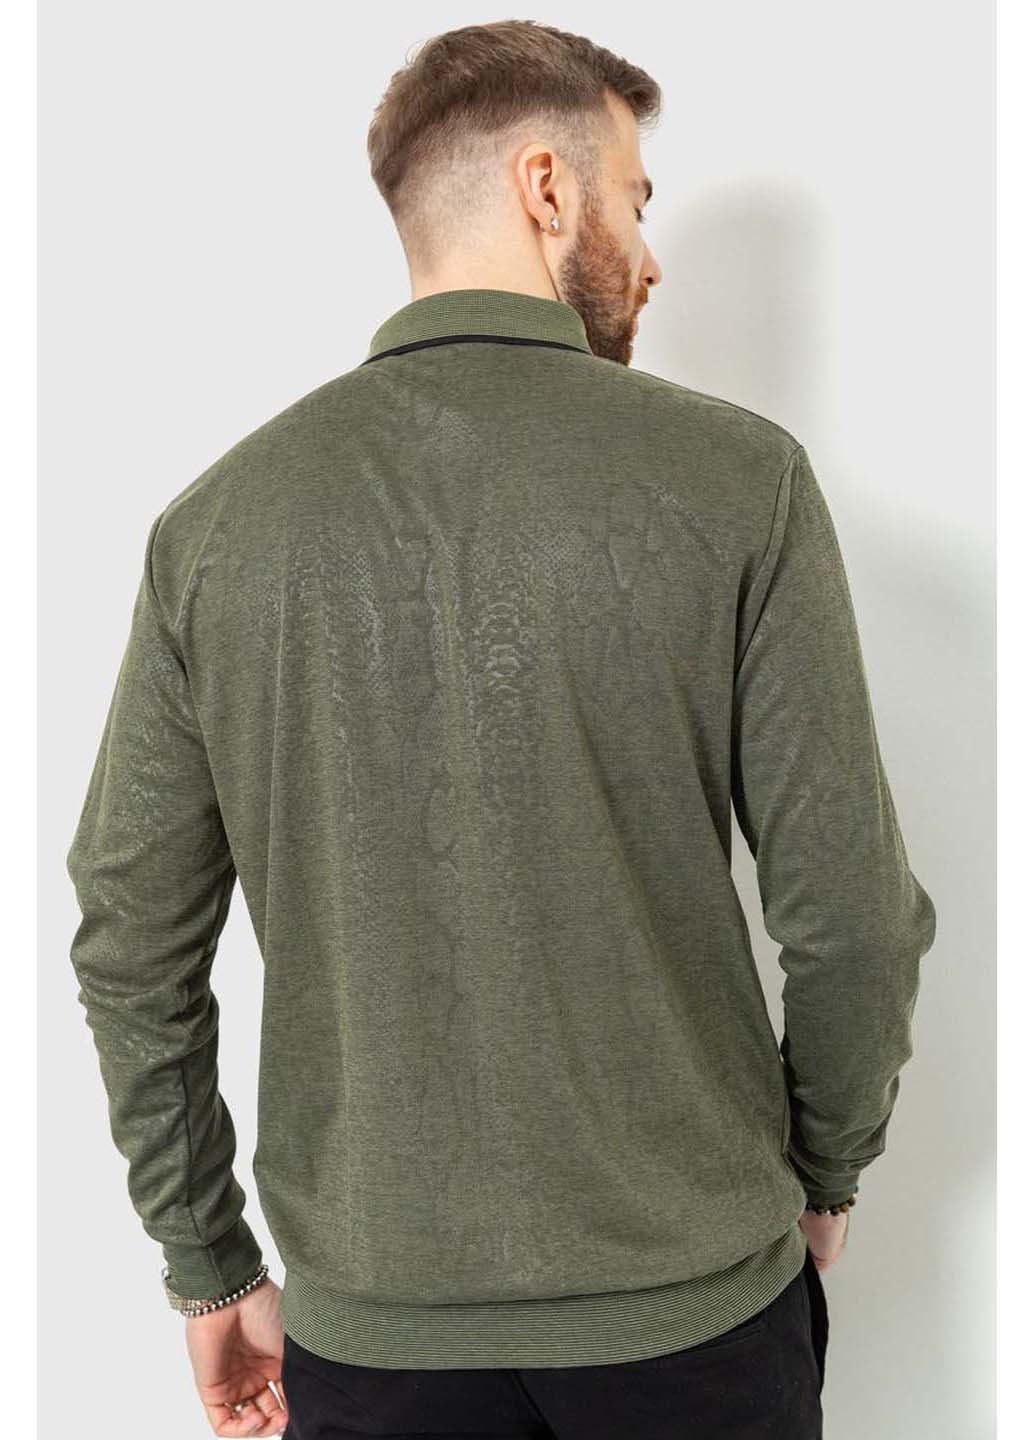 Оливковая (хаки) футболка-поло для мужчин Ager